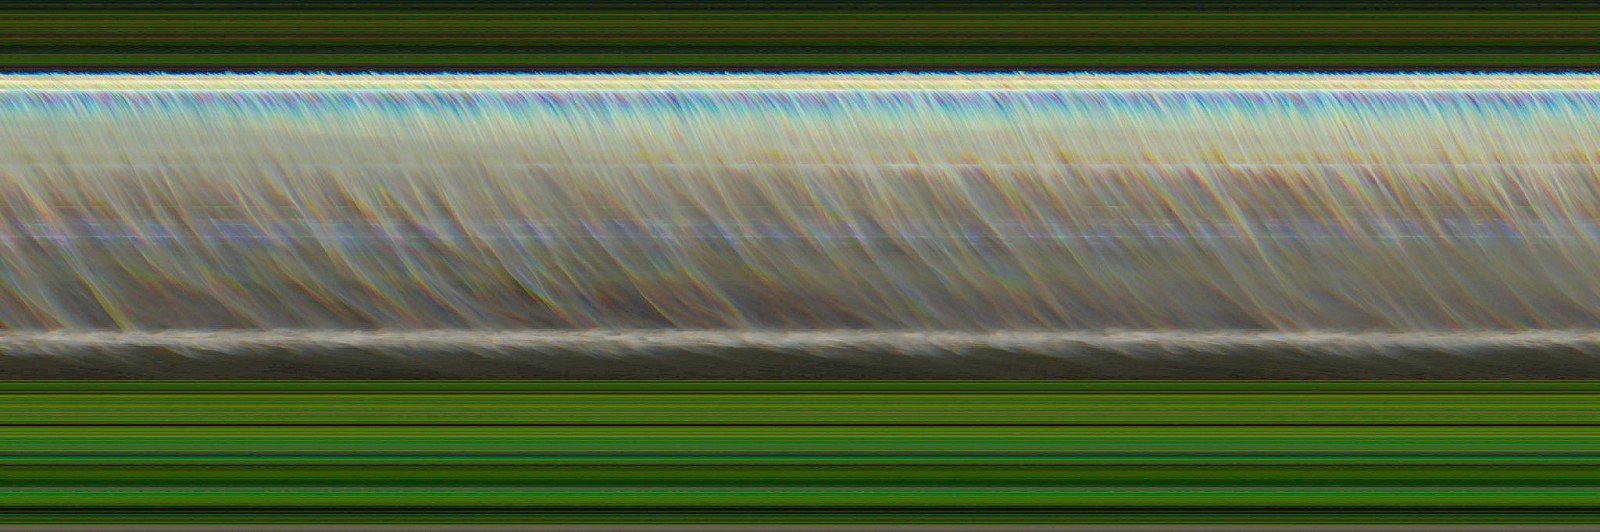 Jay Mark Johnson, AKAKA KASKATA 9, 2010 Akaka Falls HI
archival pigment on paper, mounted on aluminum, 40 x 120 in. (101.6 x 304.8 cm)